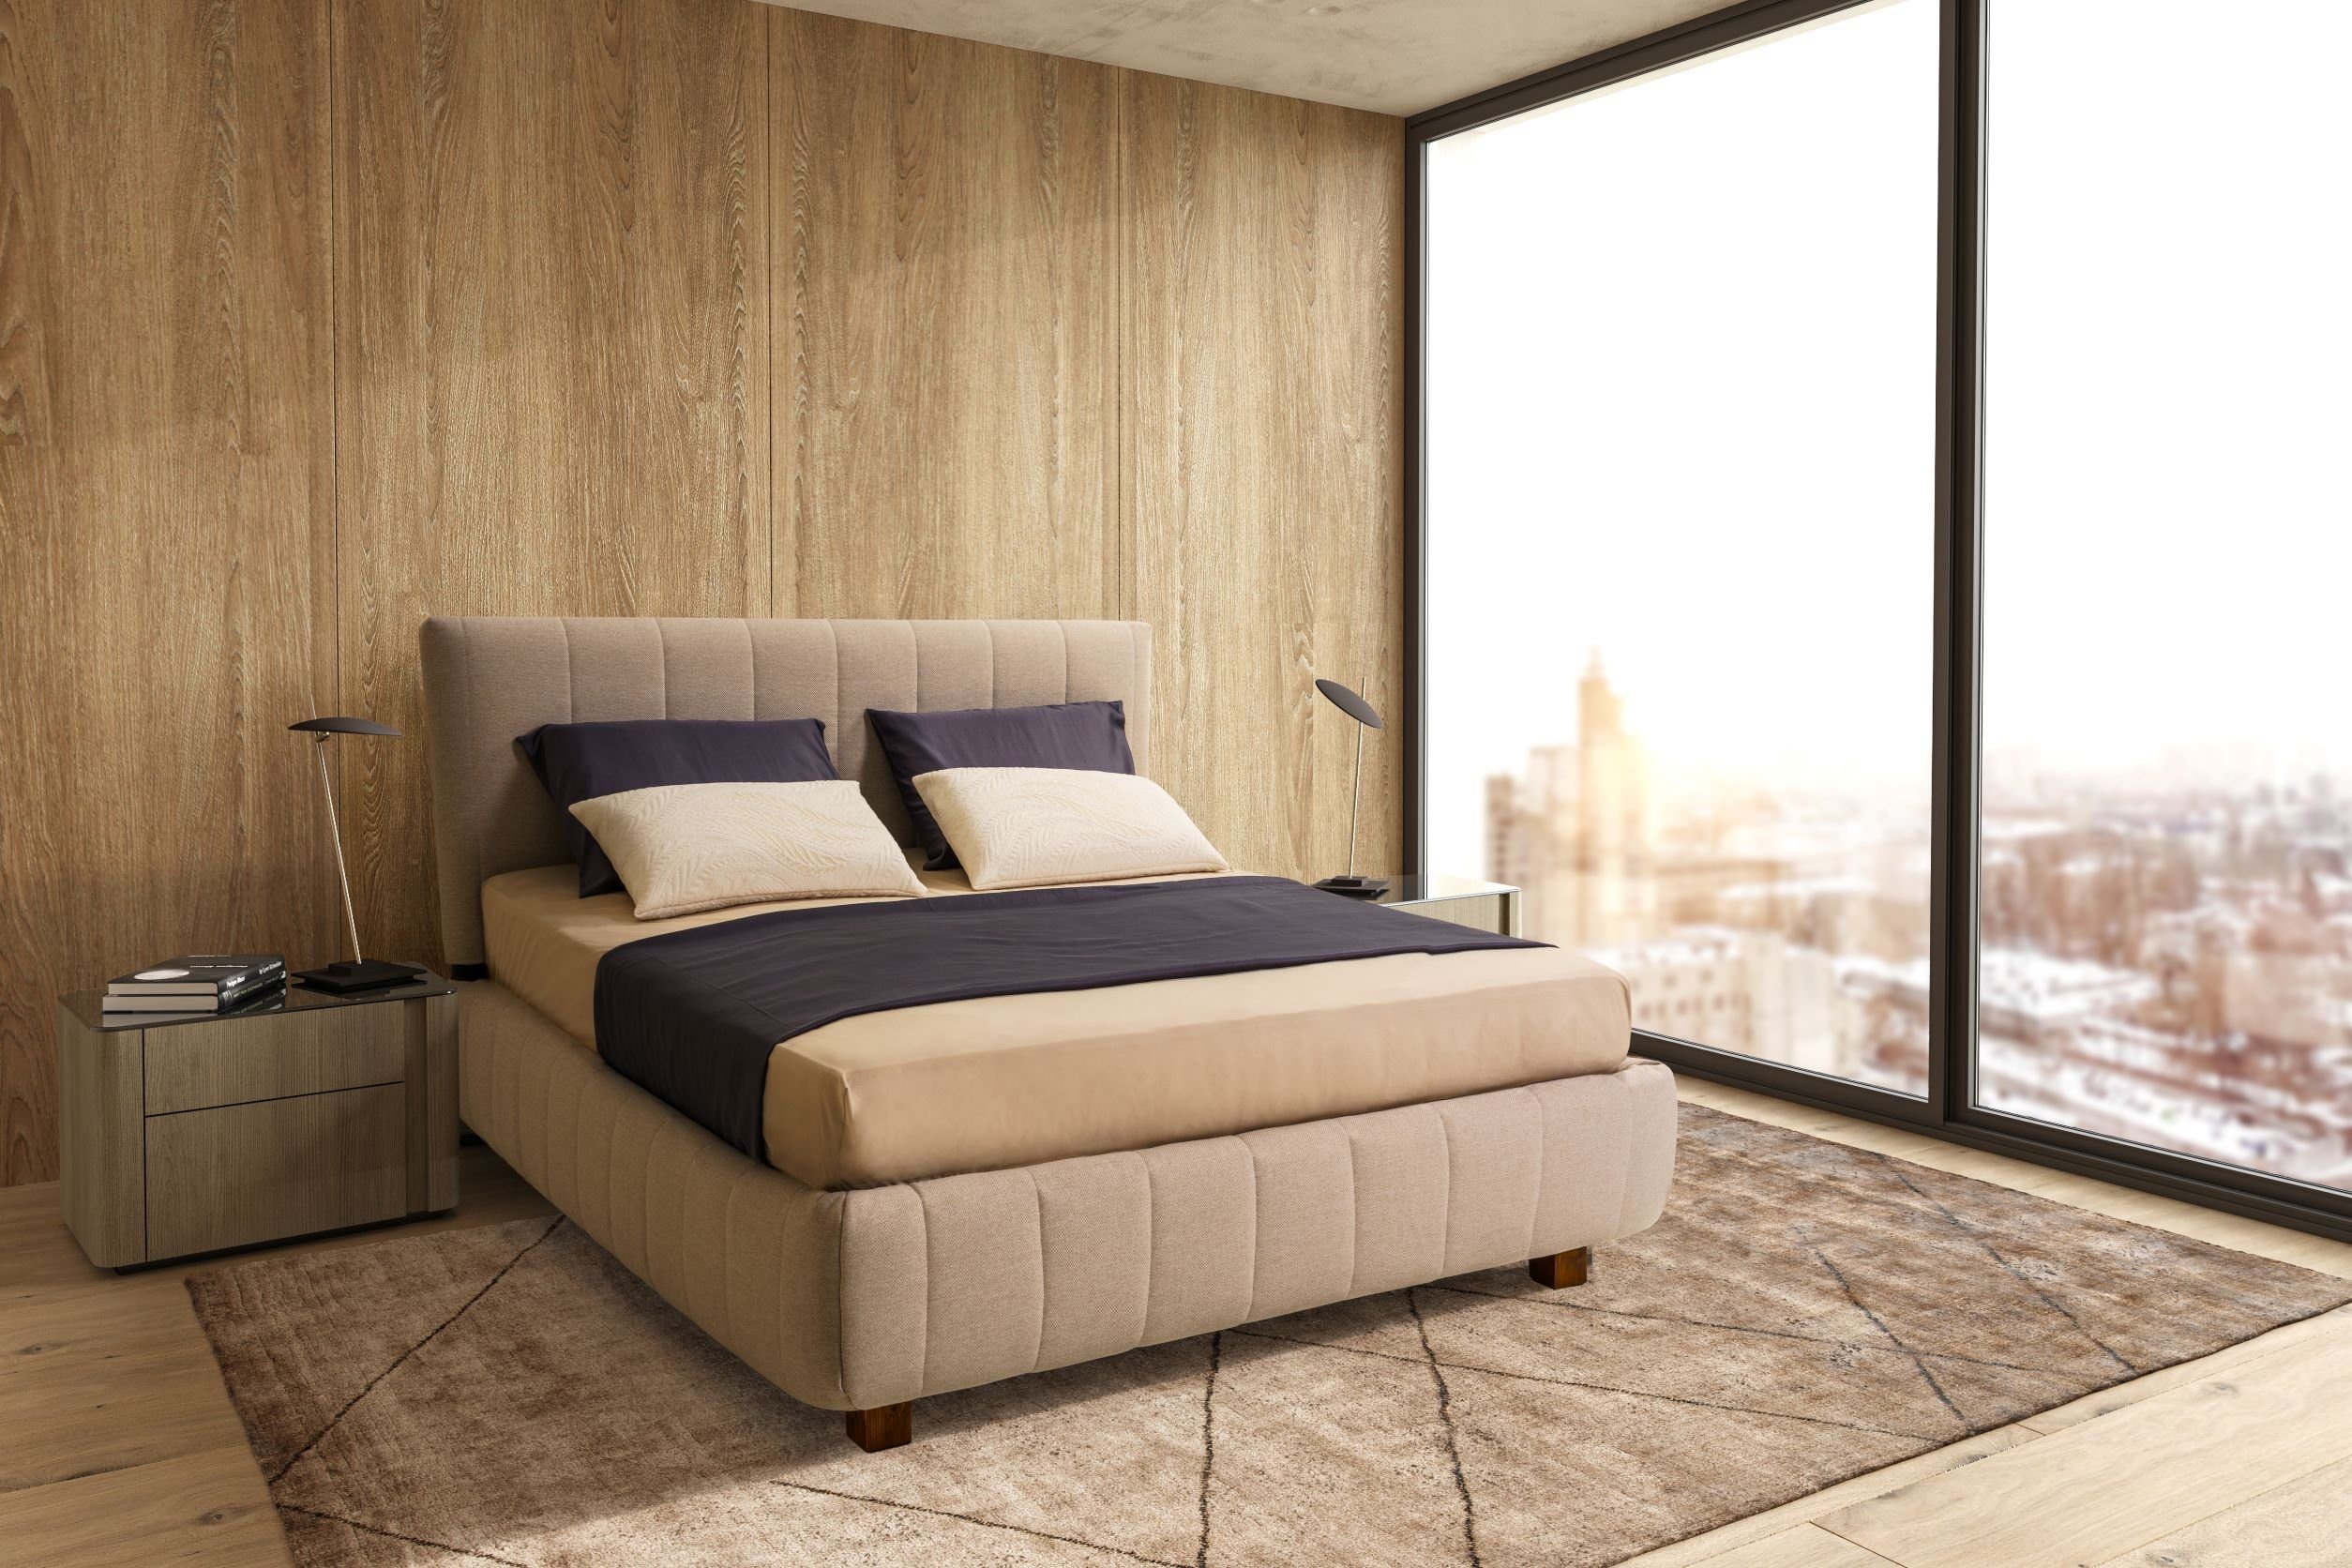 Bett Holzbett aus Beige hergestellt Letti hochwertigem Siena Calma, Massivholz Moderni